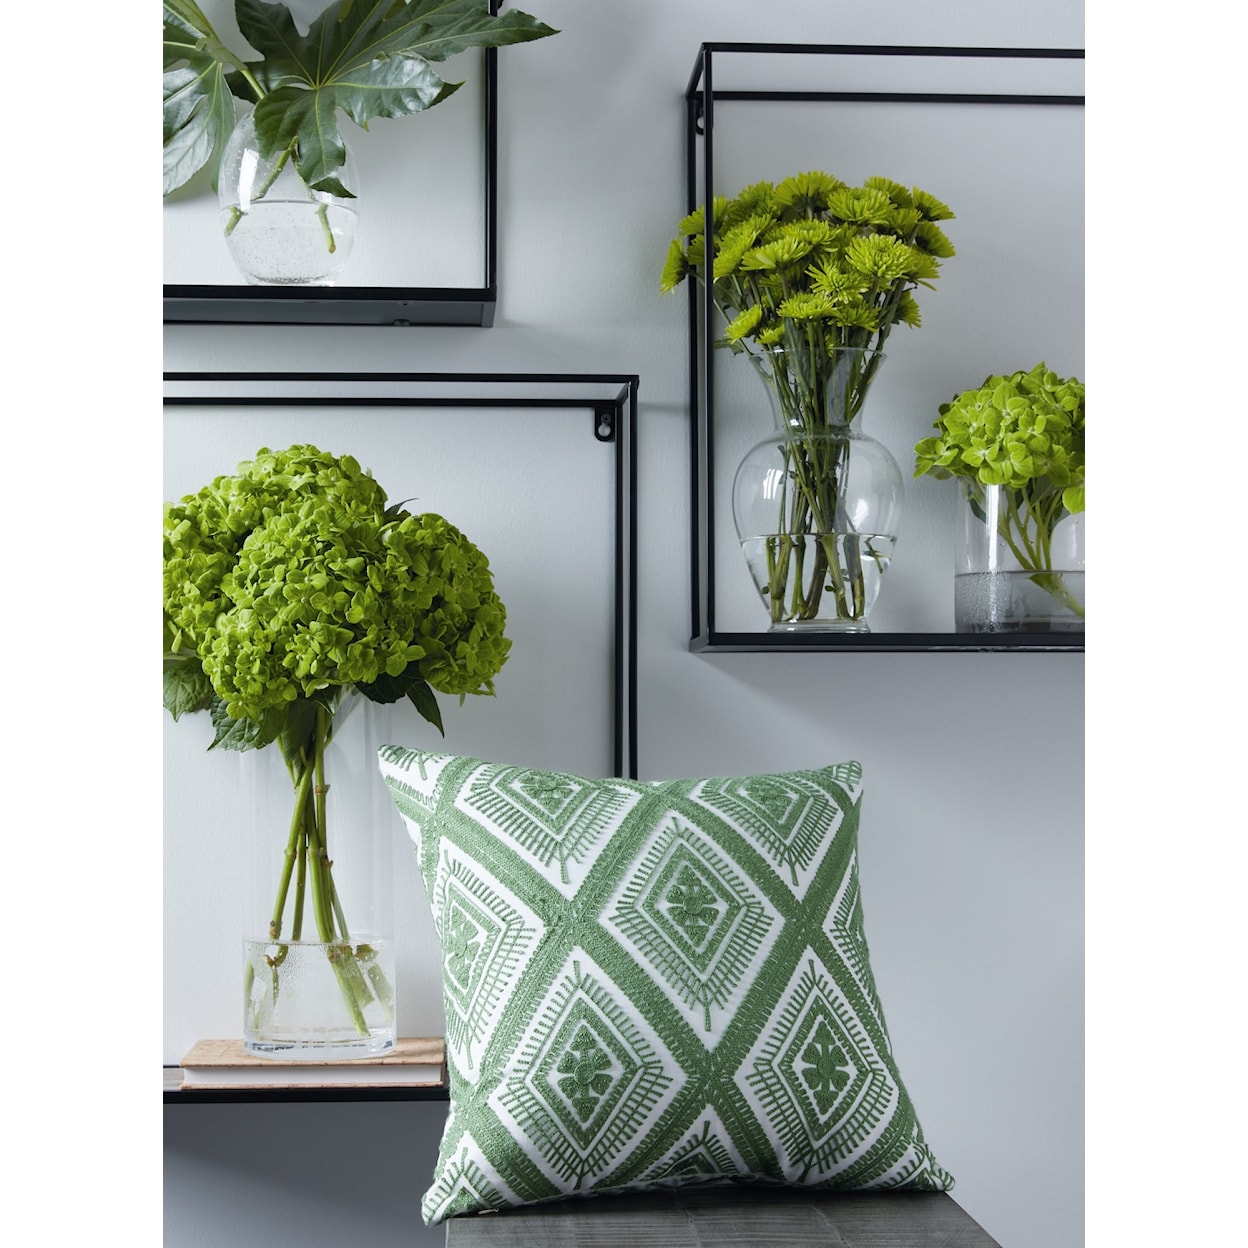 Ashley Furniture Signature Design Bellvale Pillow (Set of 4)